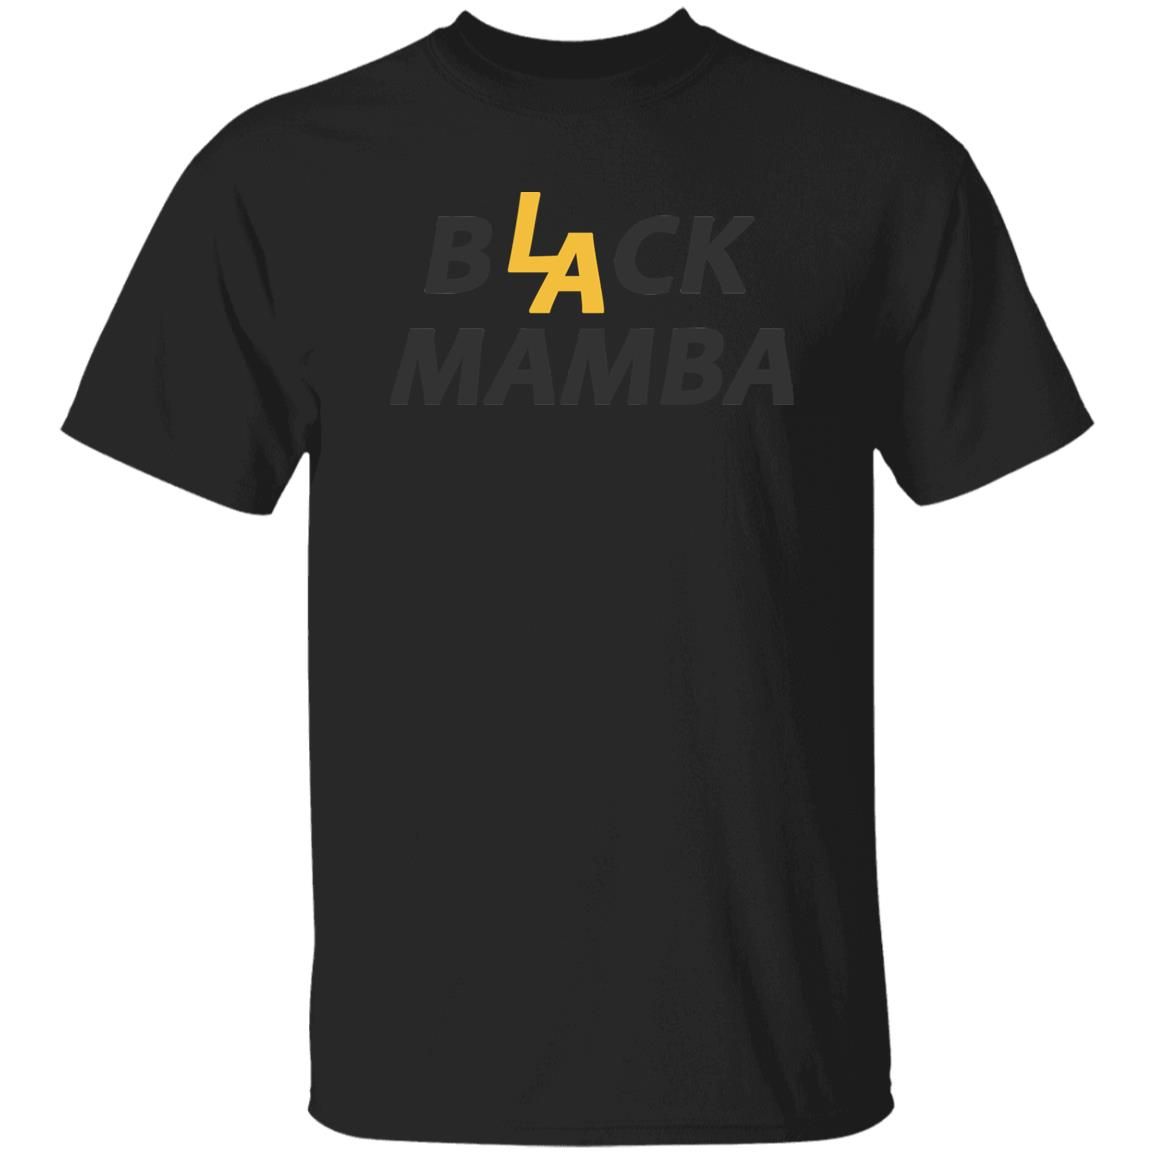 Kobe Bryant Black Mamba Black T-Shirt